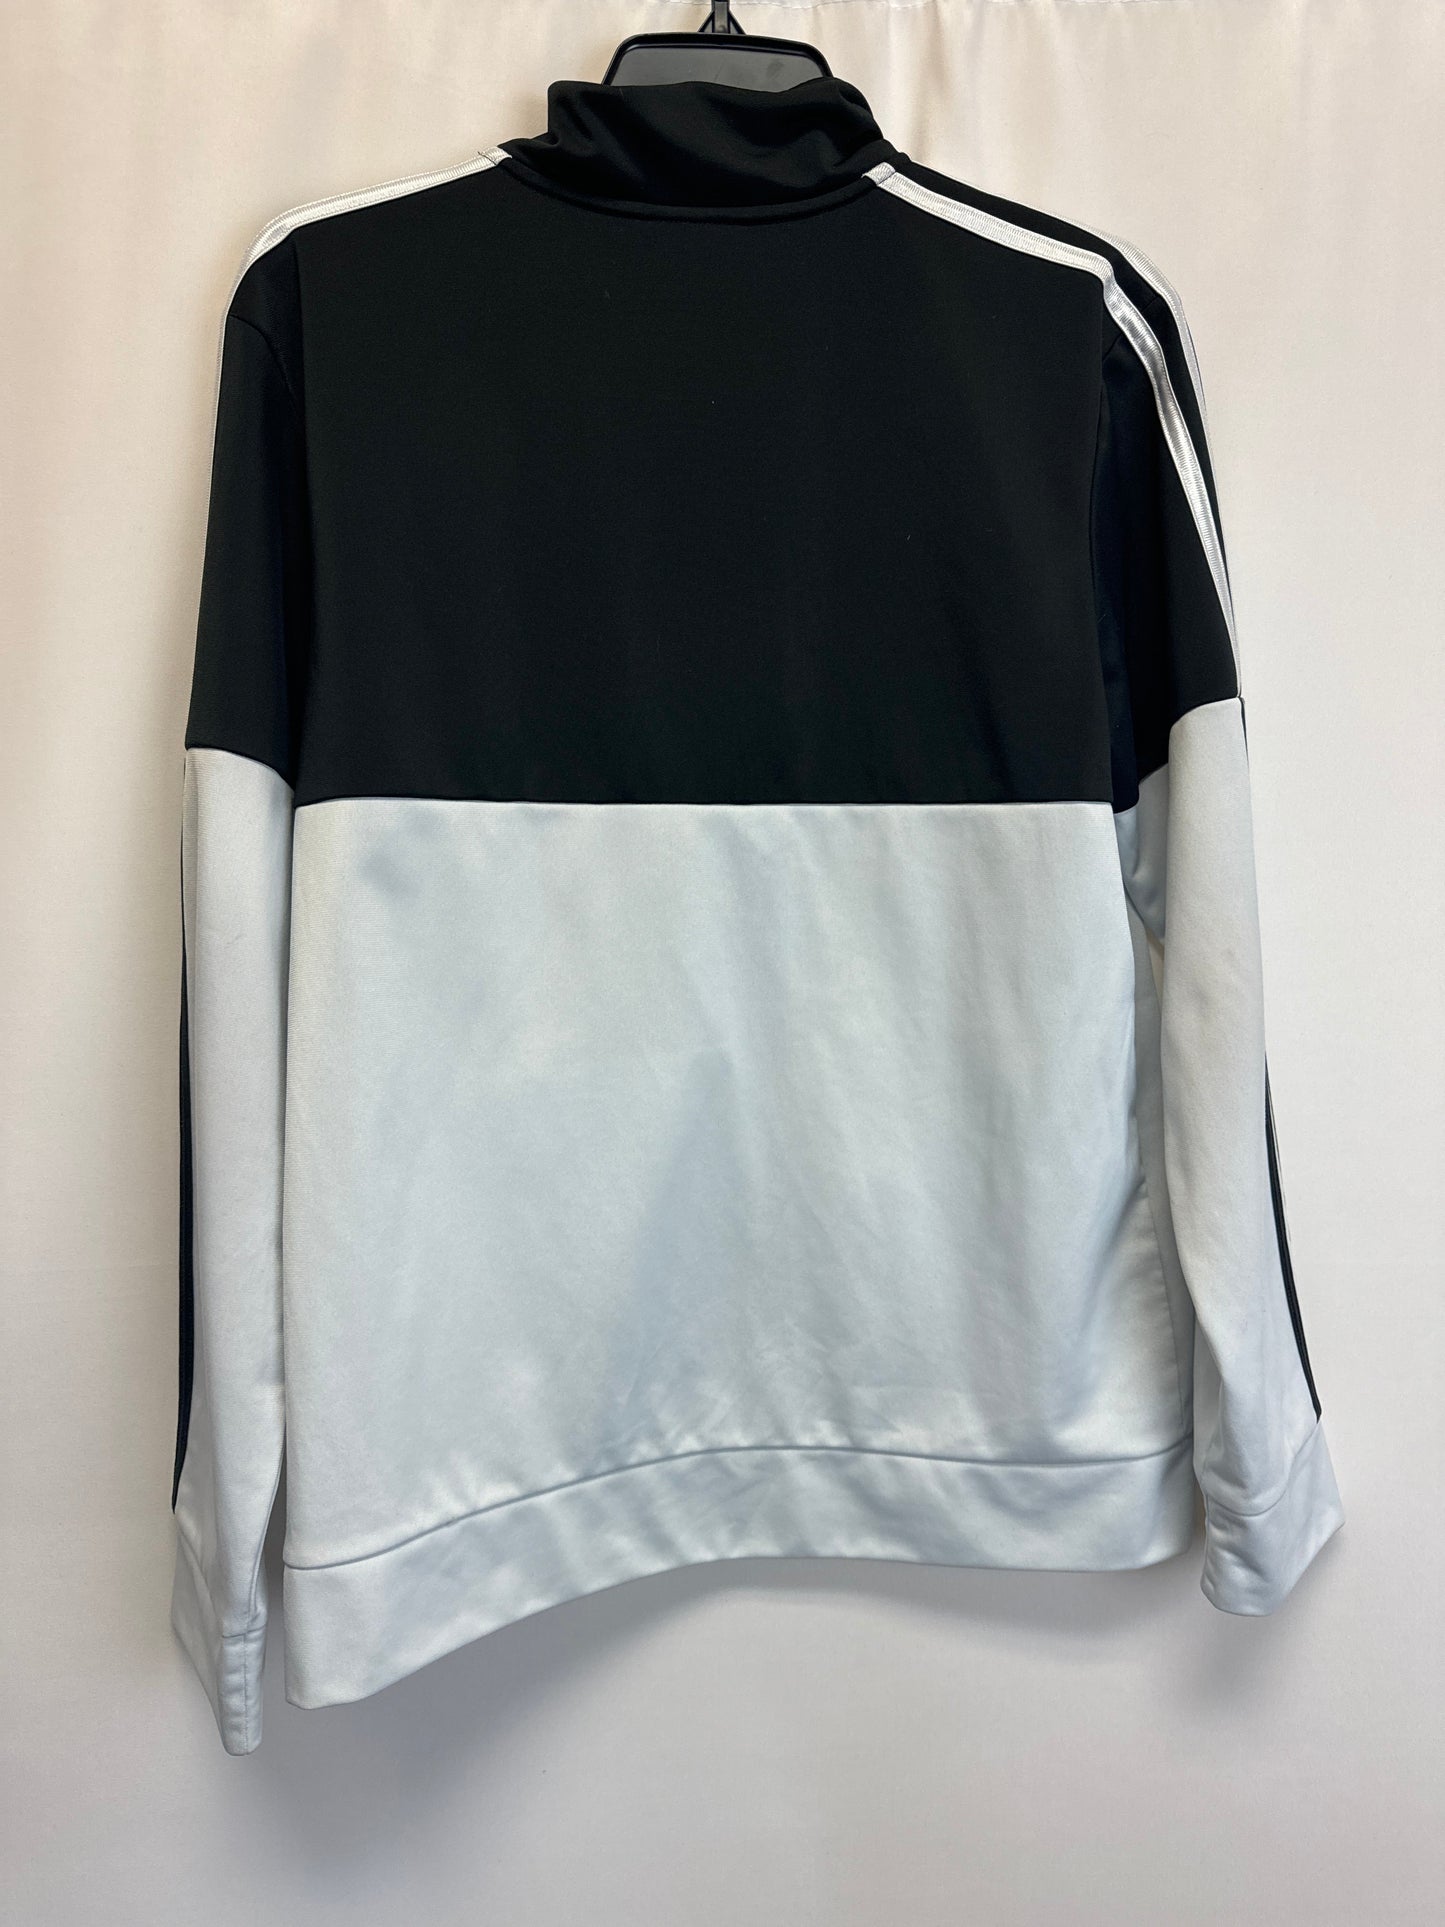 Athletic Jacket By Adidas  Size: Xl